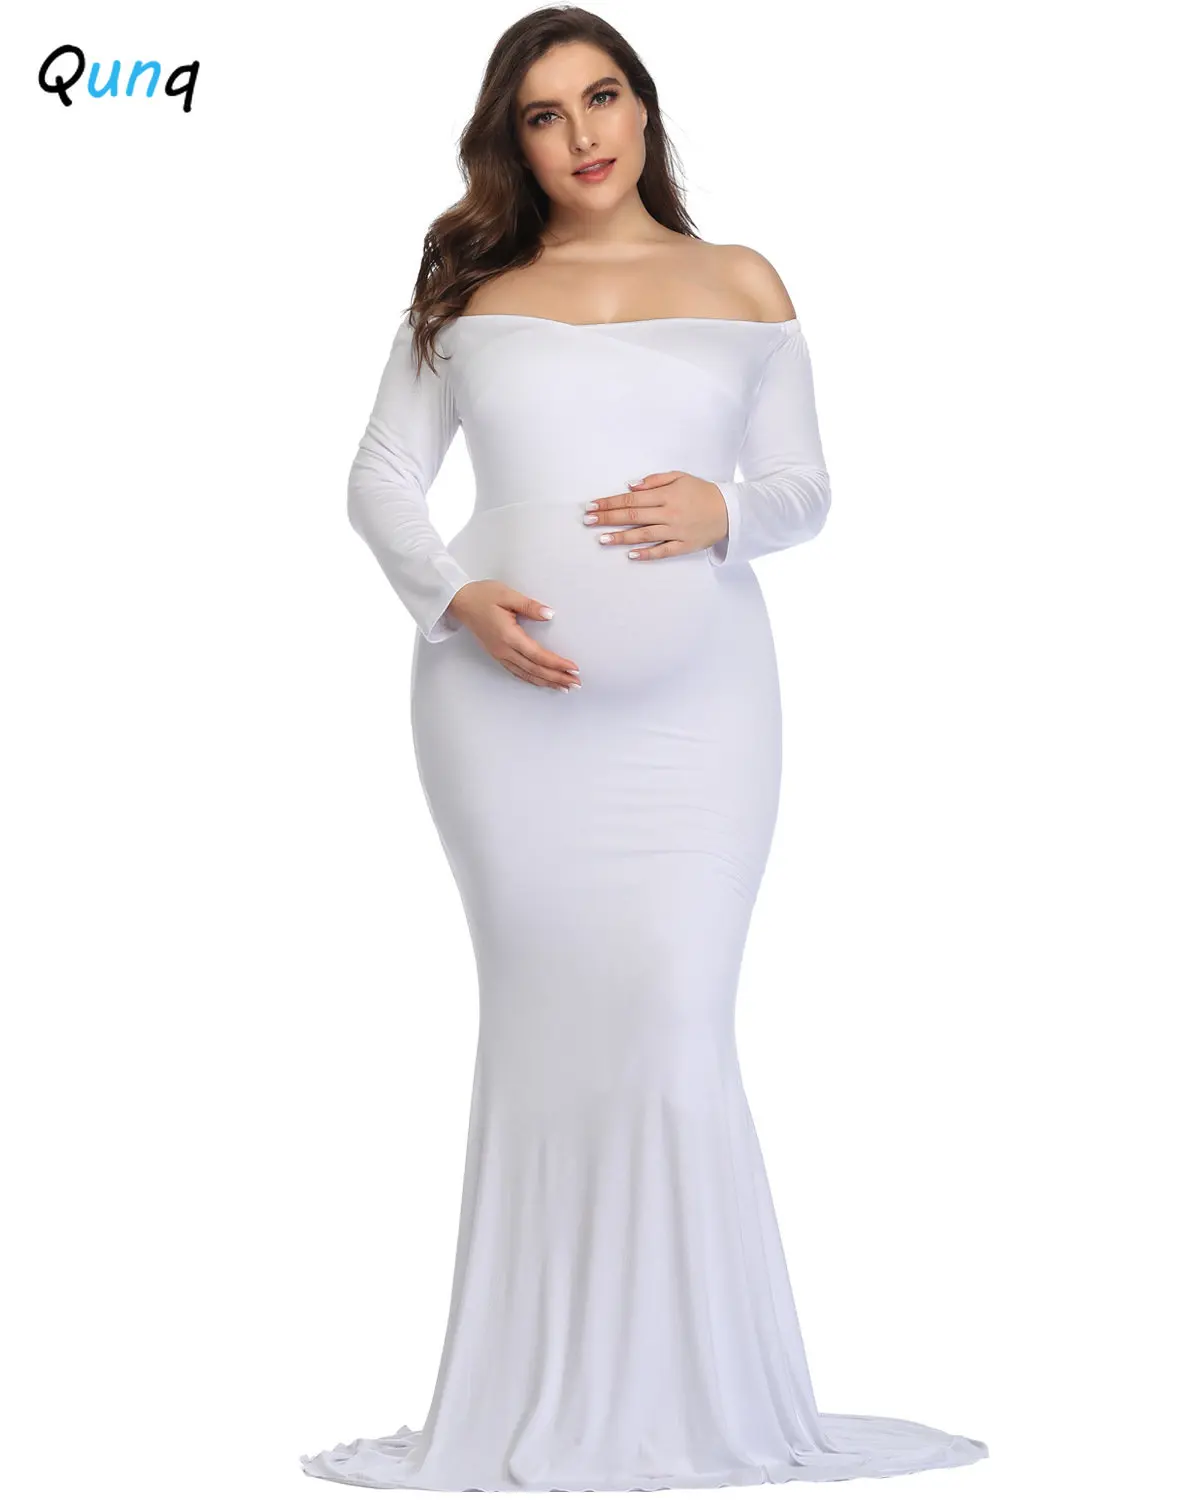 

Qunq New Pregnancy Clothes Women One Line Collar Long Sleeve High Waist Long Dress Temperament Commuting Casual Maternity Gown